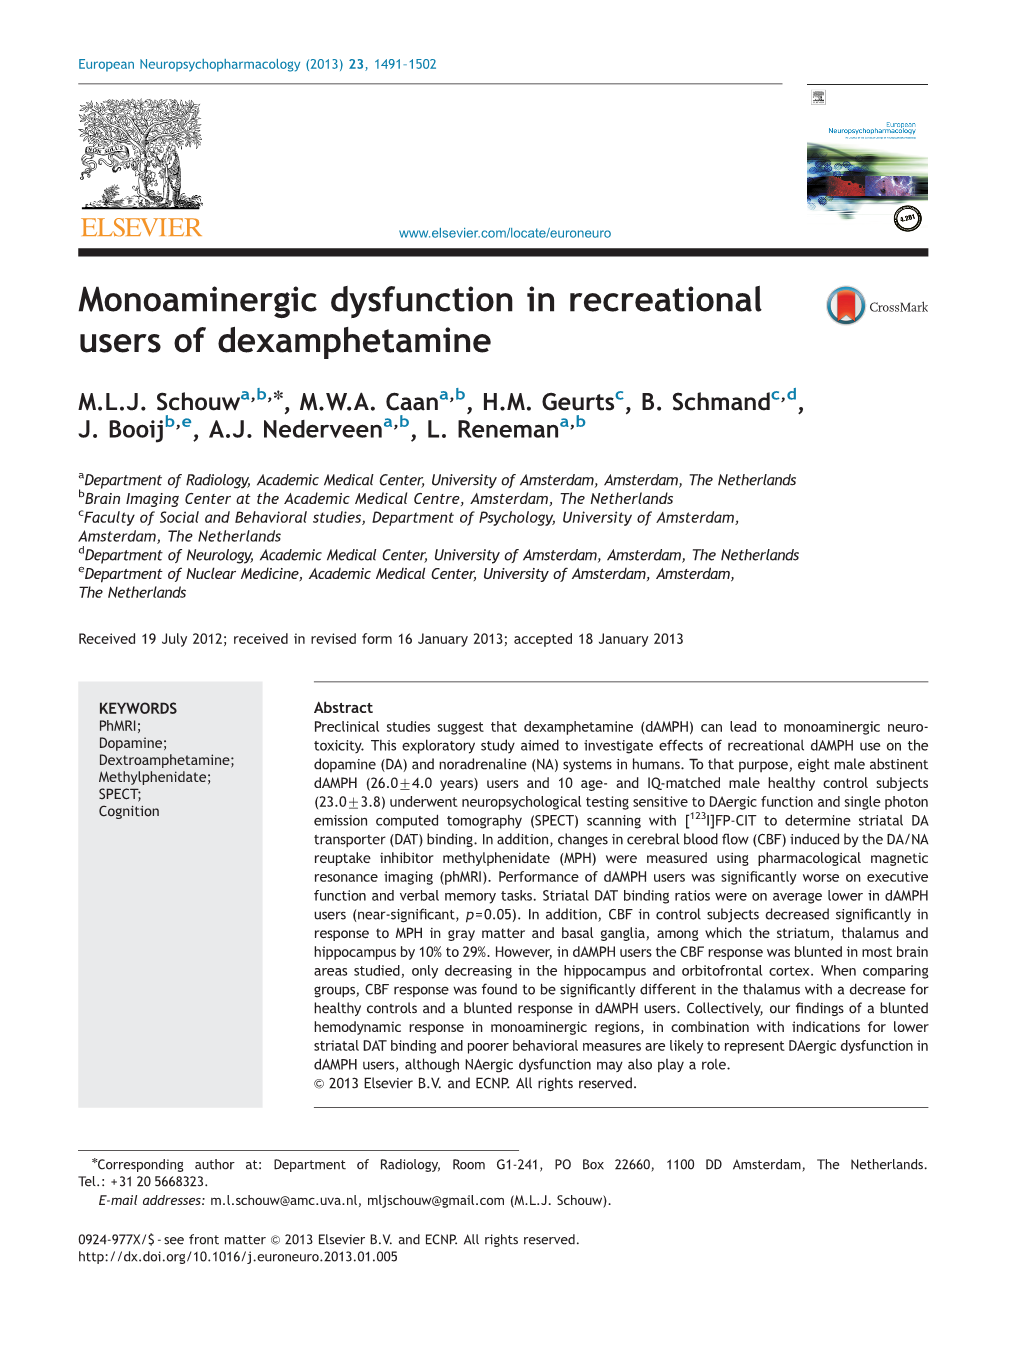 Monoaminergic Dysfunction in Recreational Users of Dexamphetamine